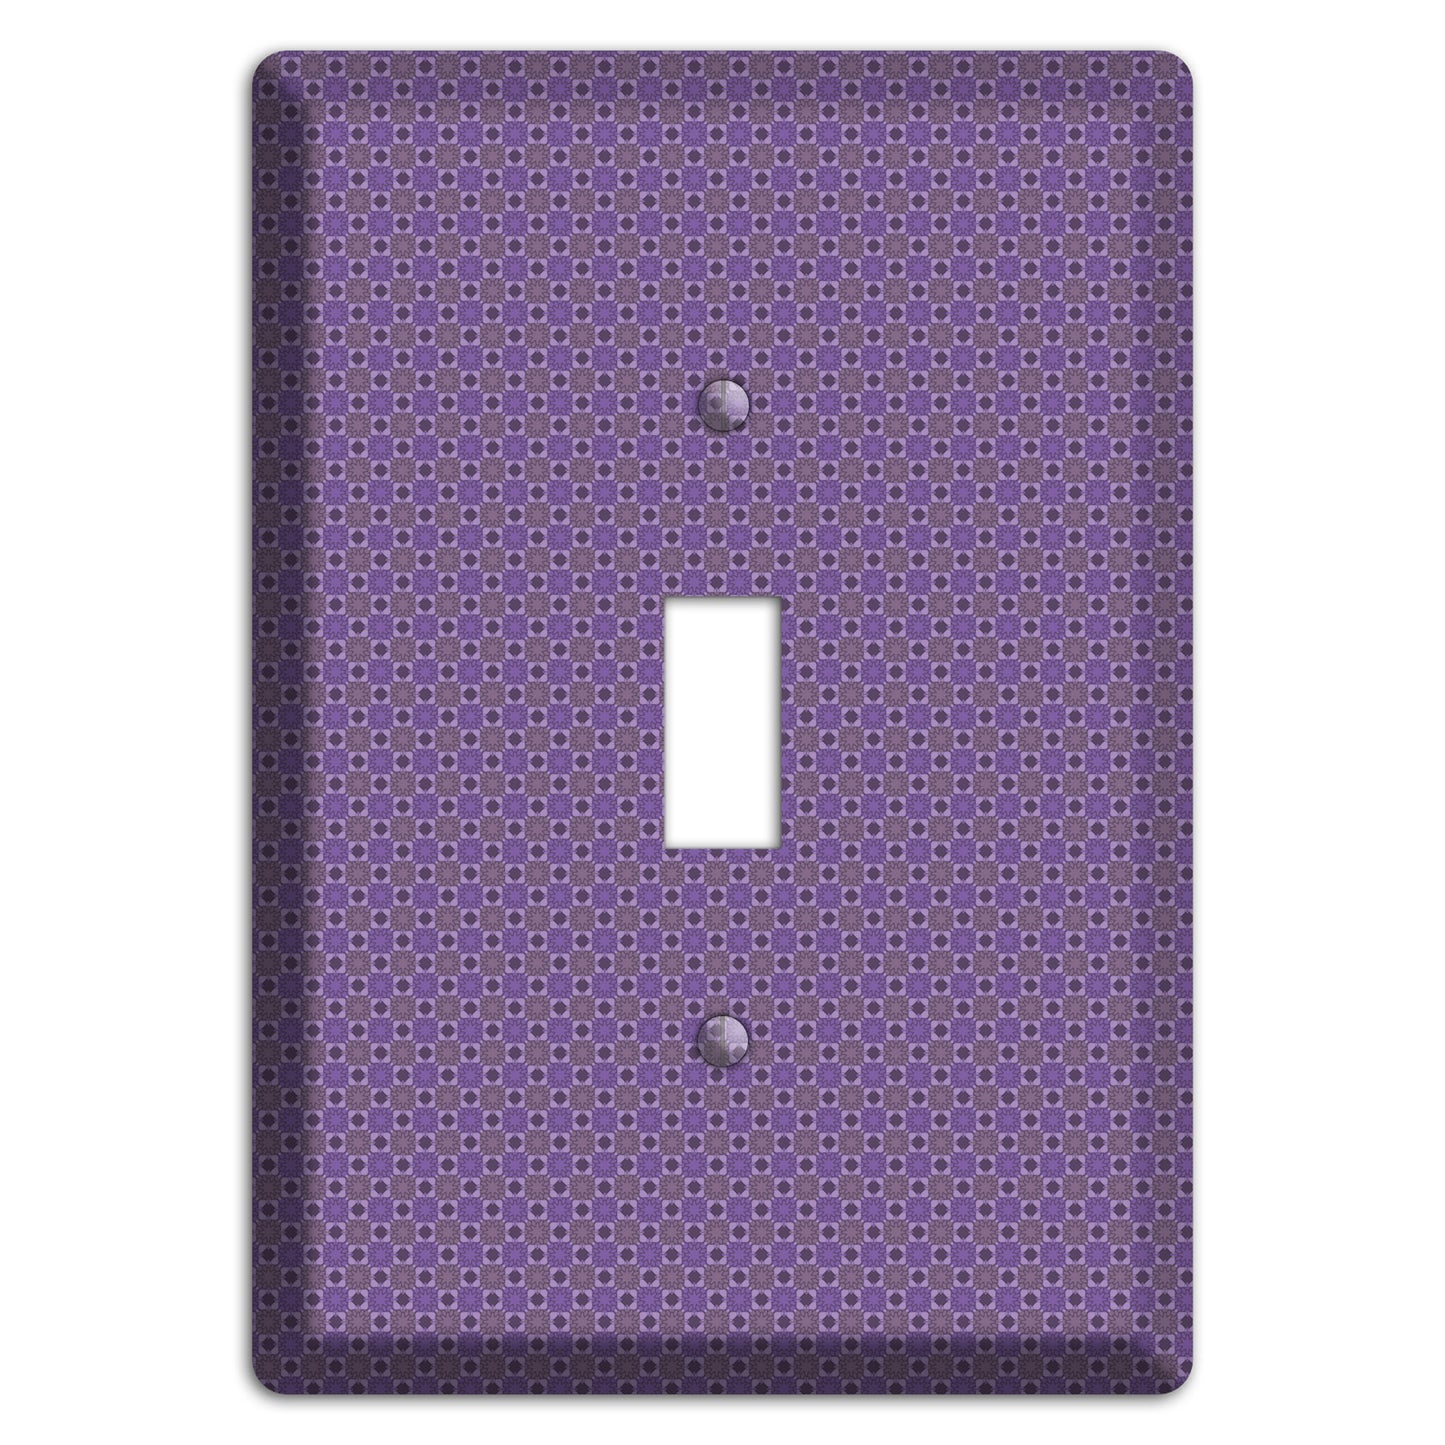 Multi Purple Tiled Cover Plates